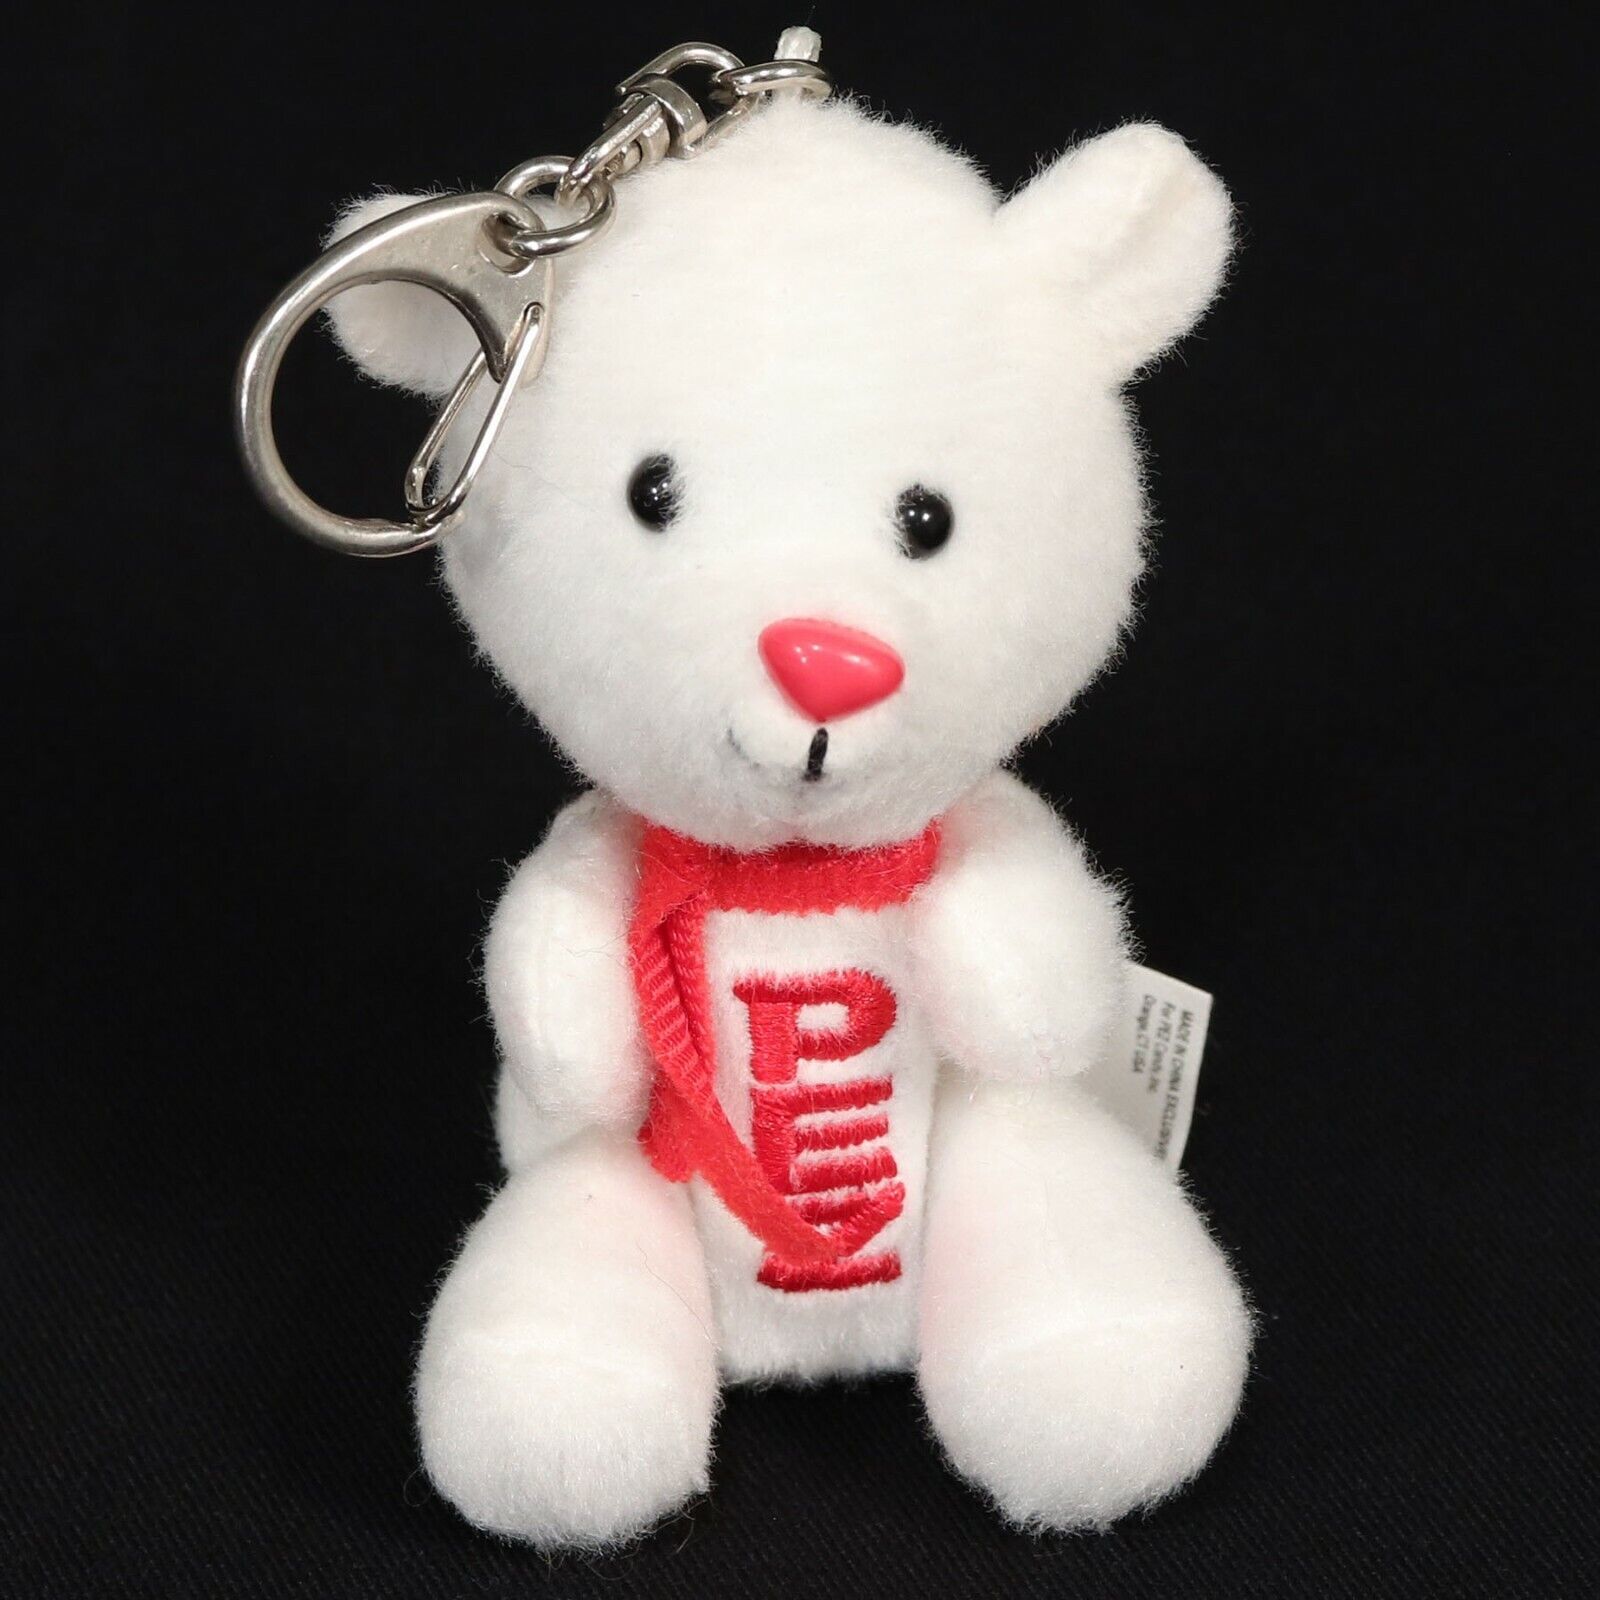 PEZ Winter 2014 Plush Polar Bear Candy Dispenser Keychain White Stuffed Animal - $8.89